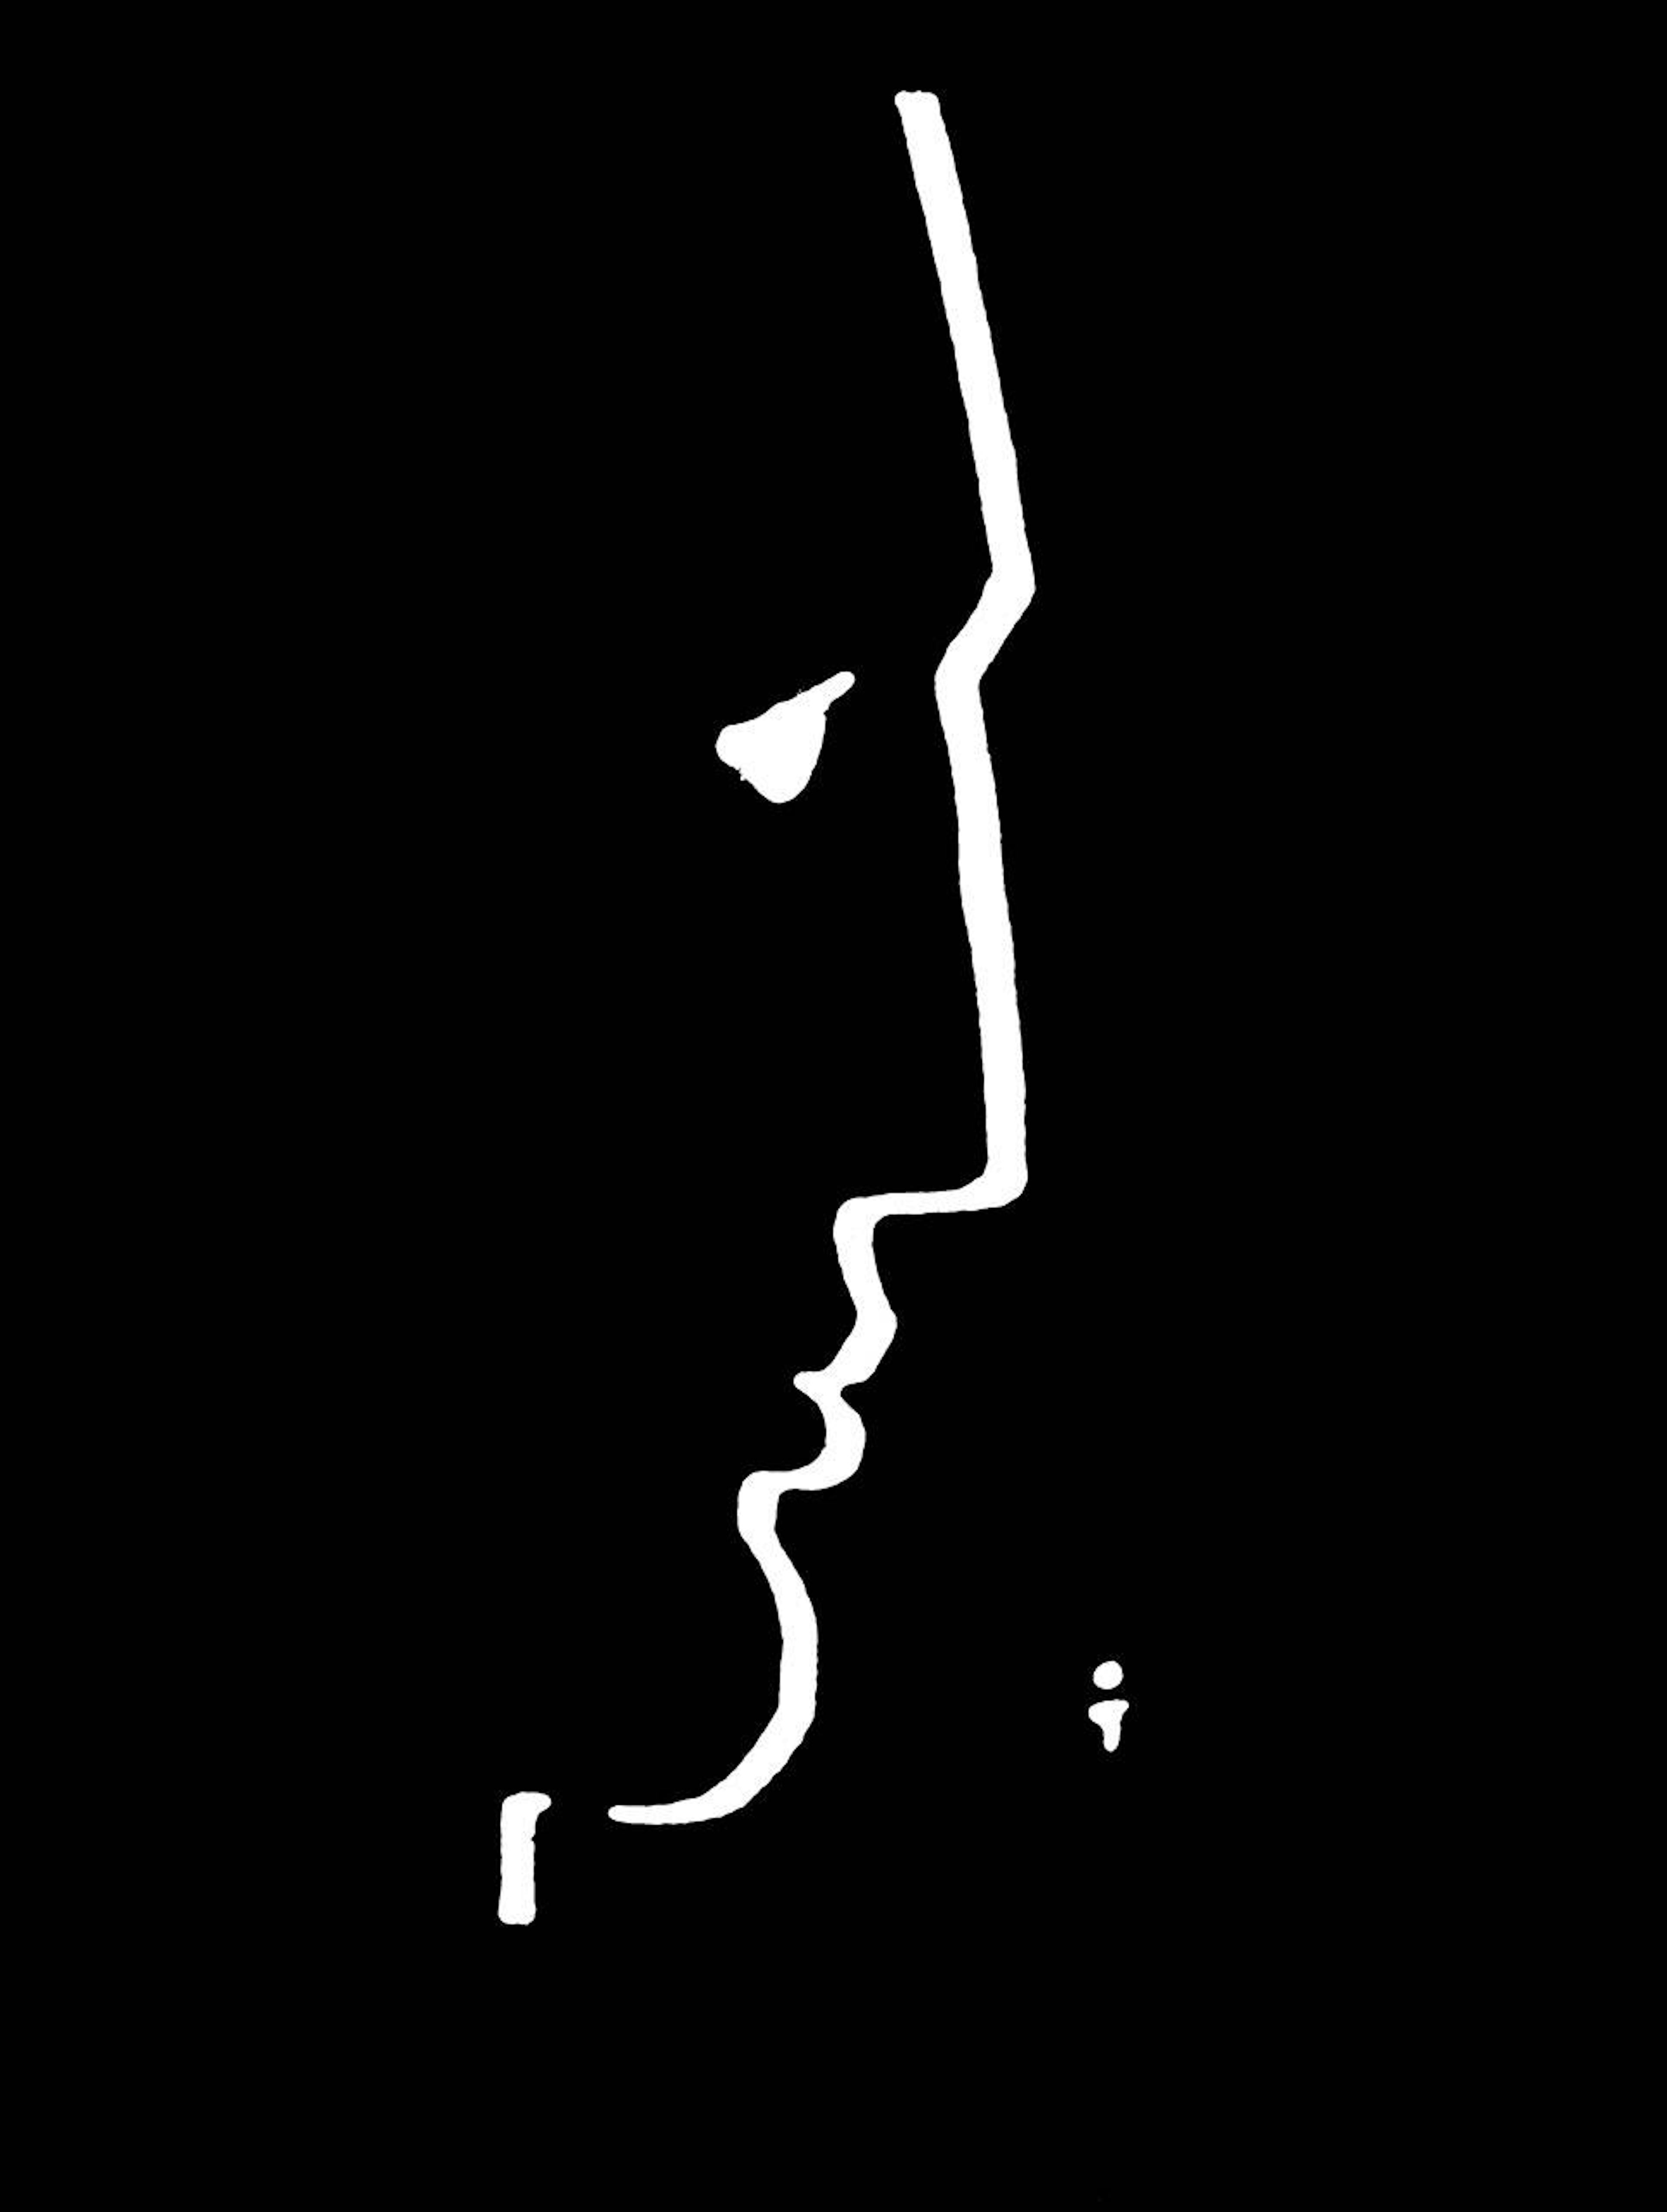 Portrait of Hubert de Givenchy by René Gruau © Sarl René Gruau